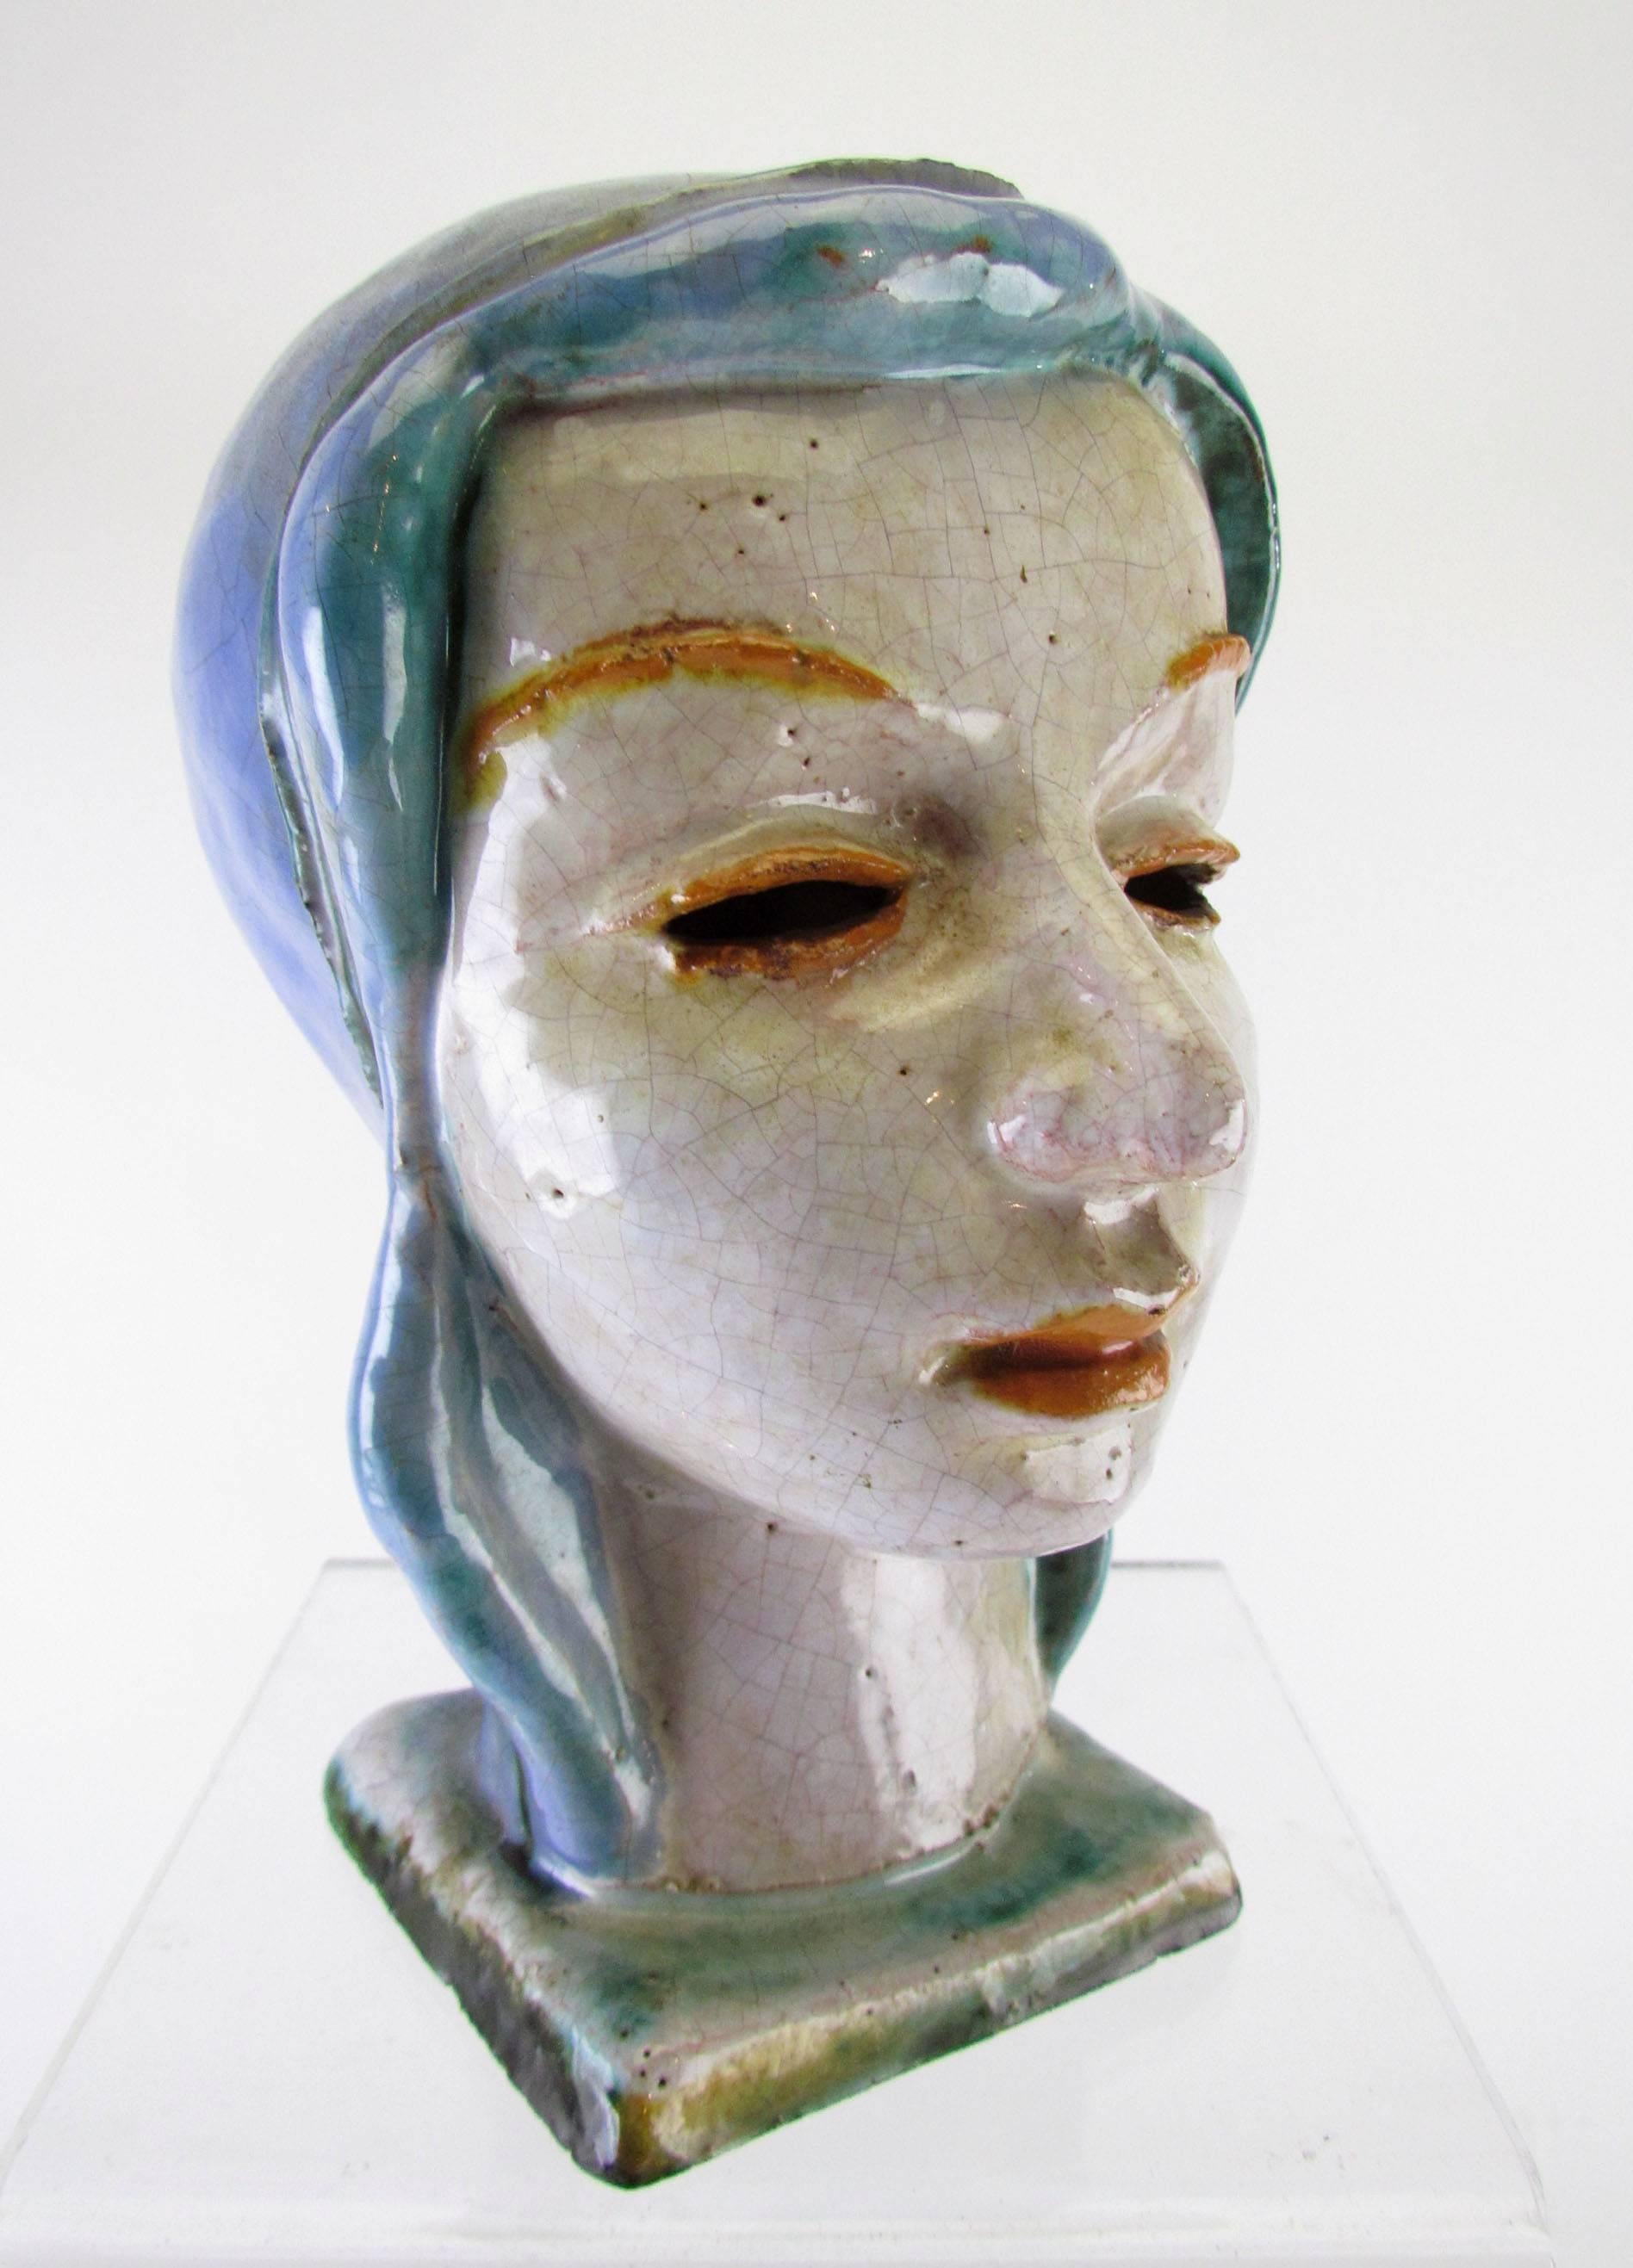 Glazed Head of a Woman Sculpture, Wiener Werkstatte Style, Made in Austria, circa 1920s